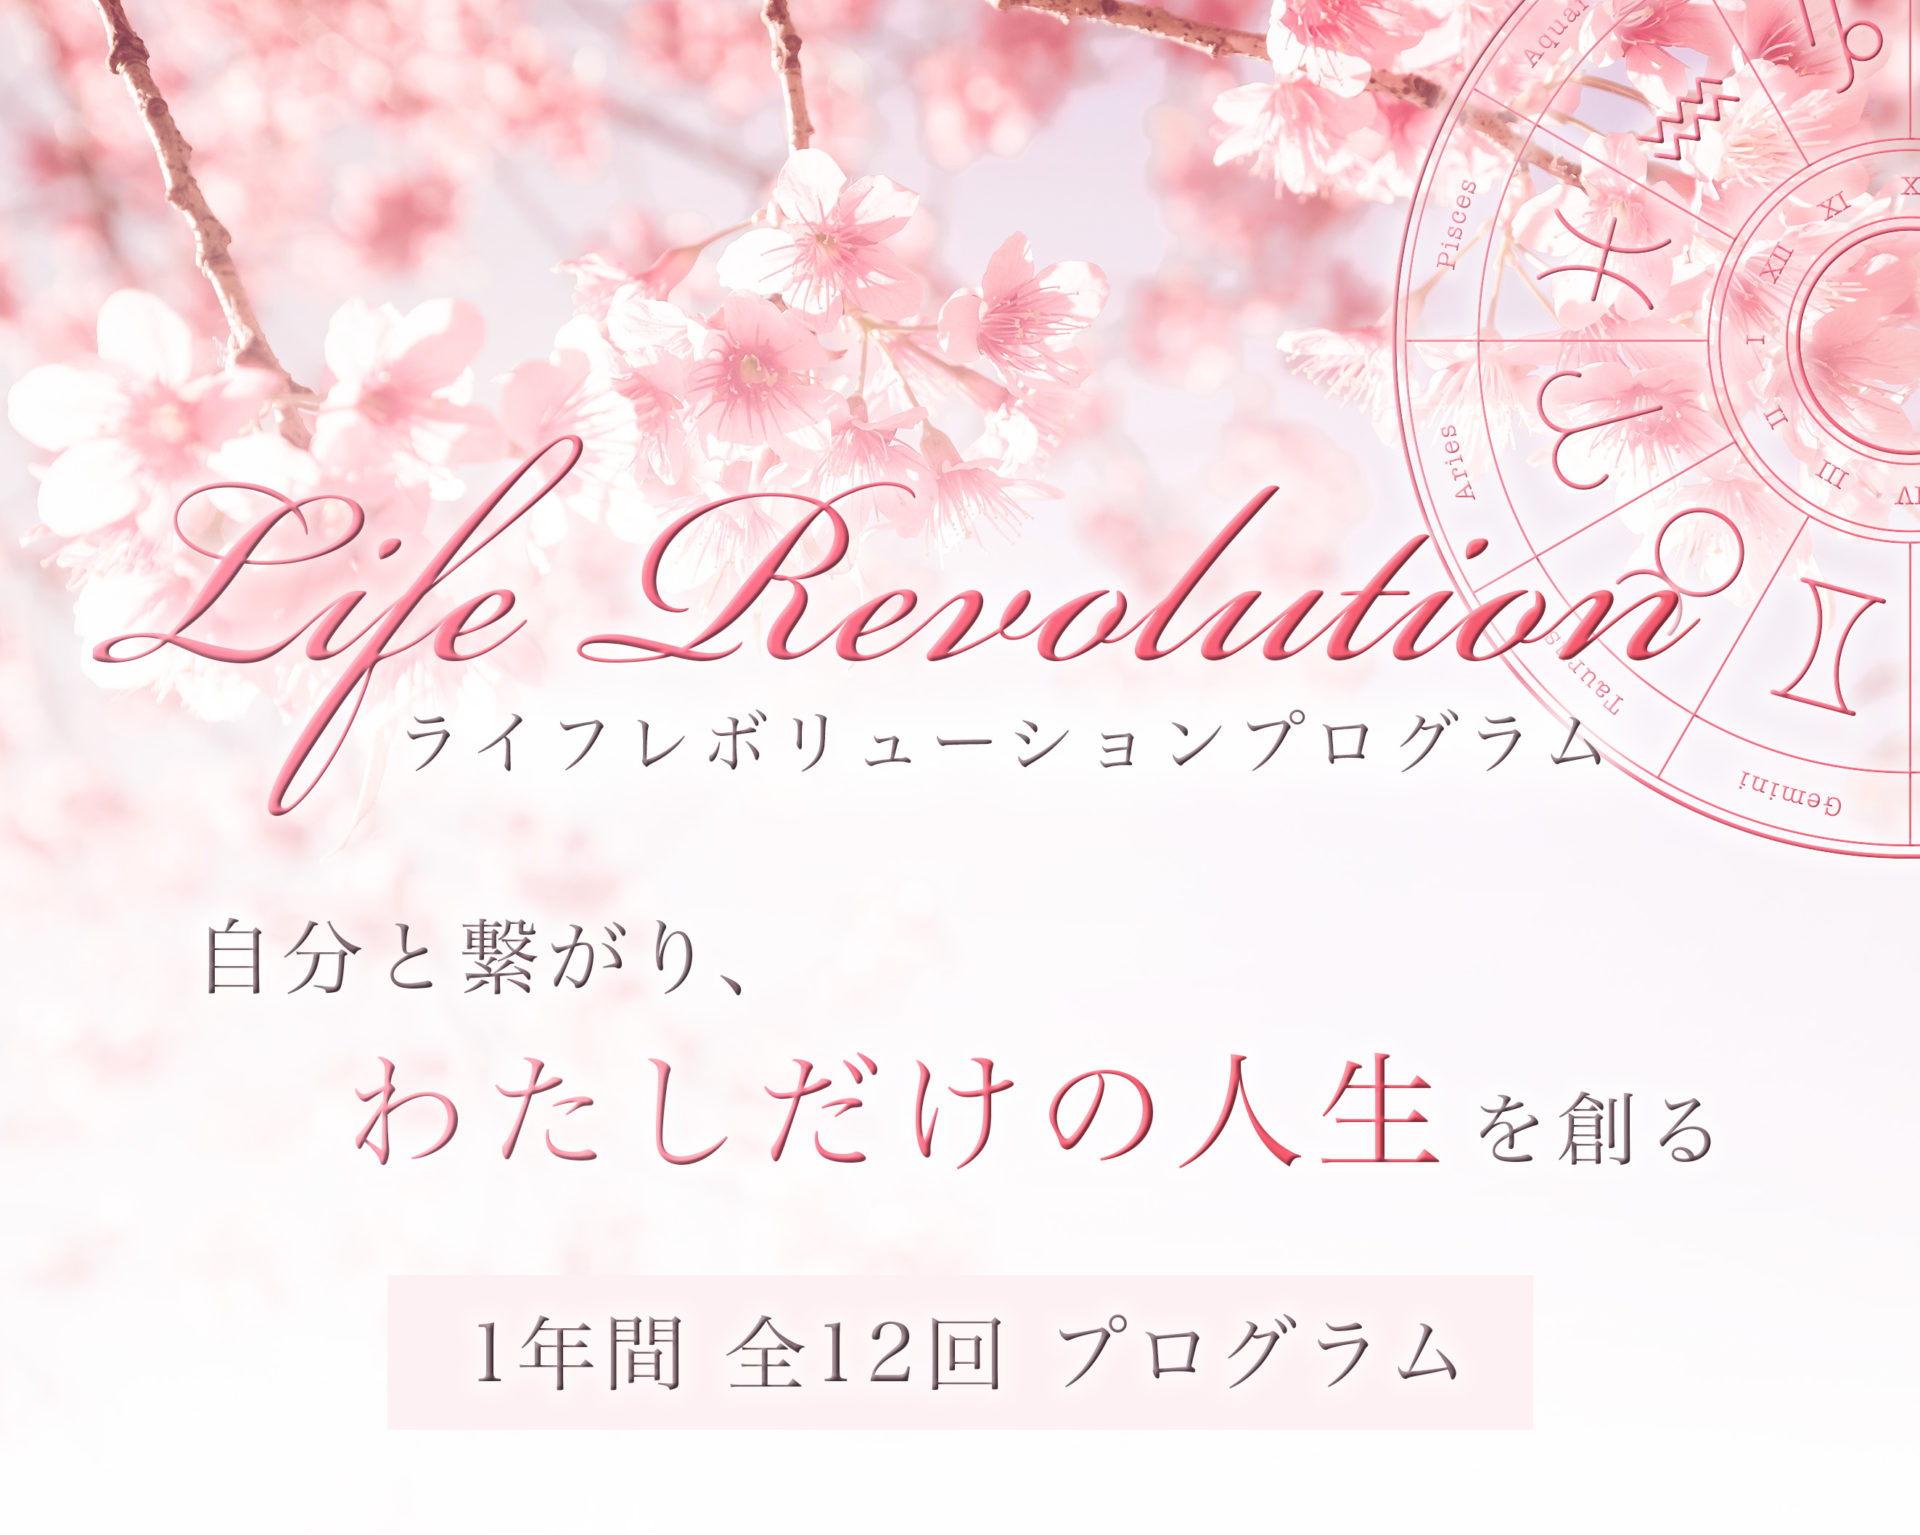 life revolution program